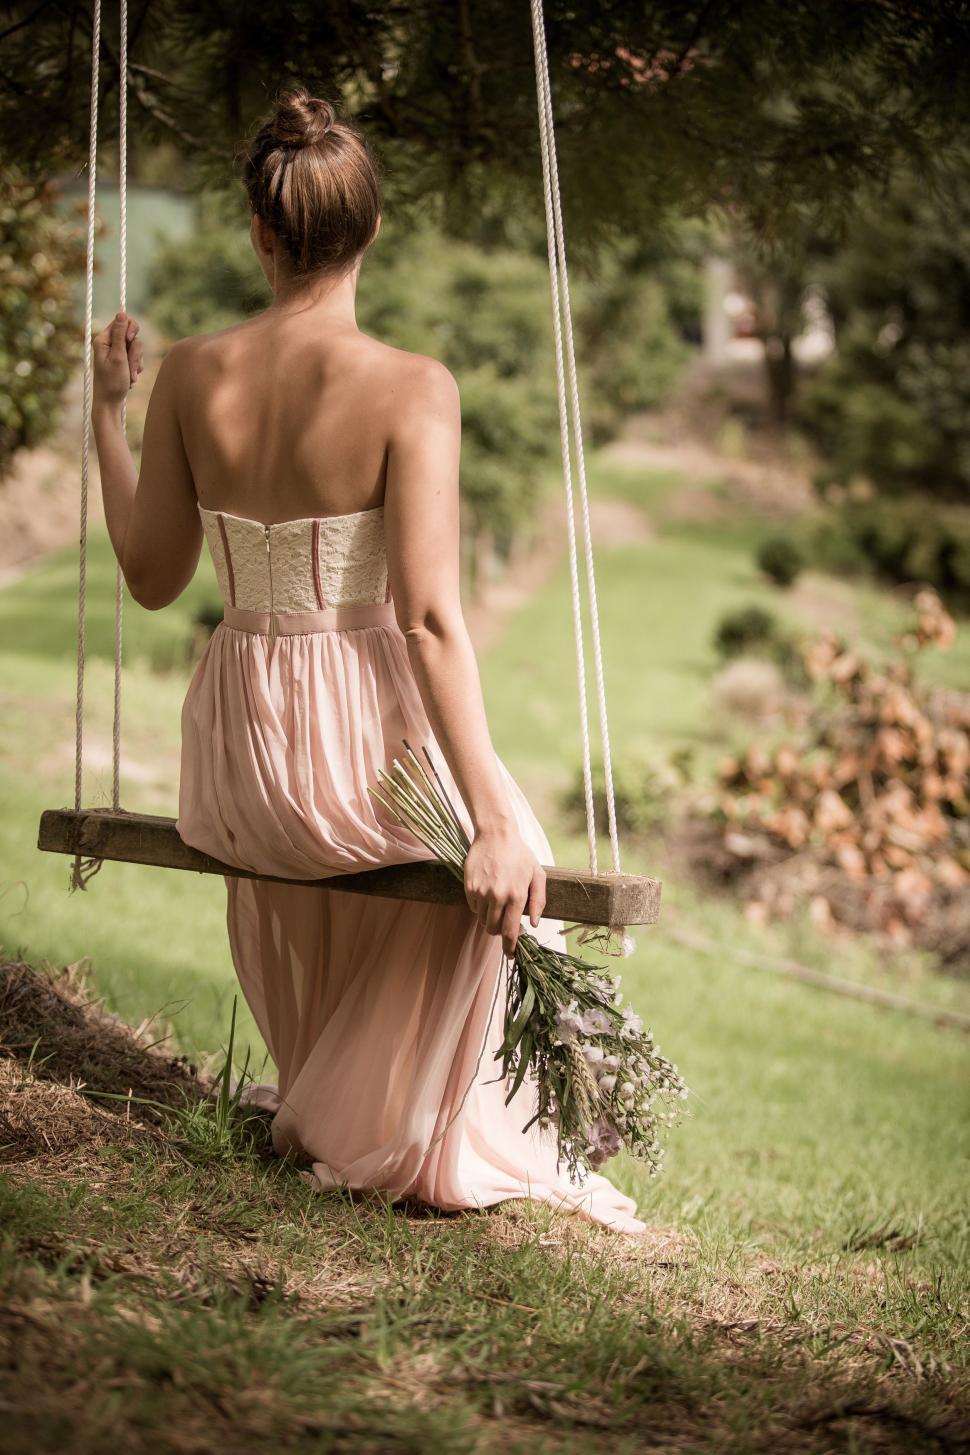 Free Image of Woman in Dress Sitting on Swing 